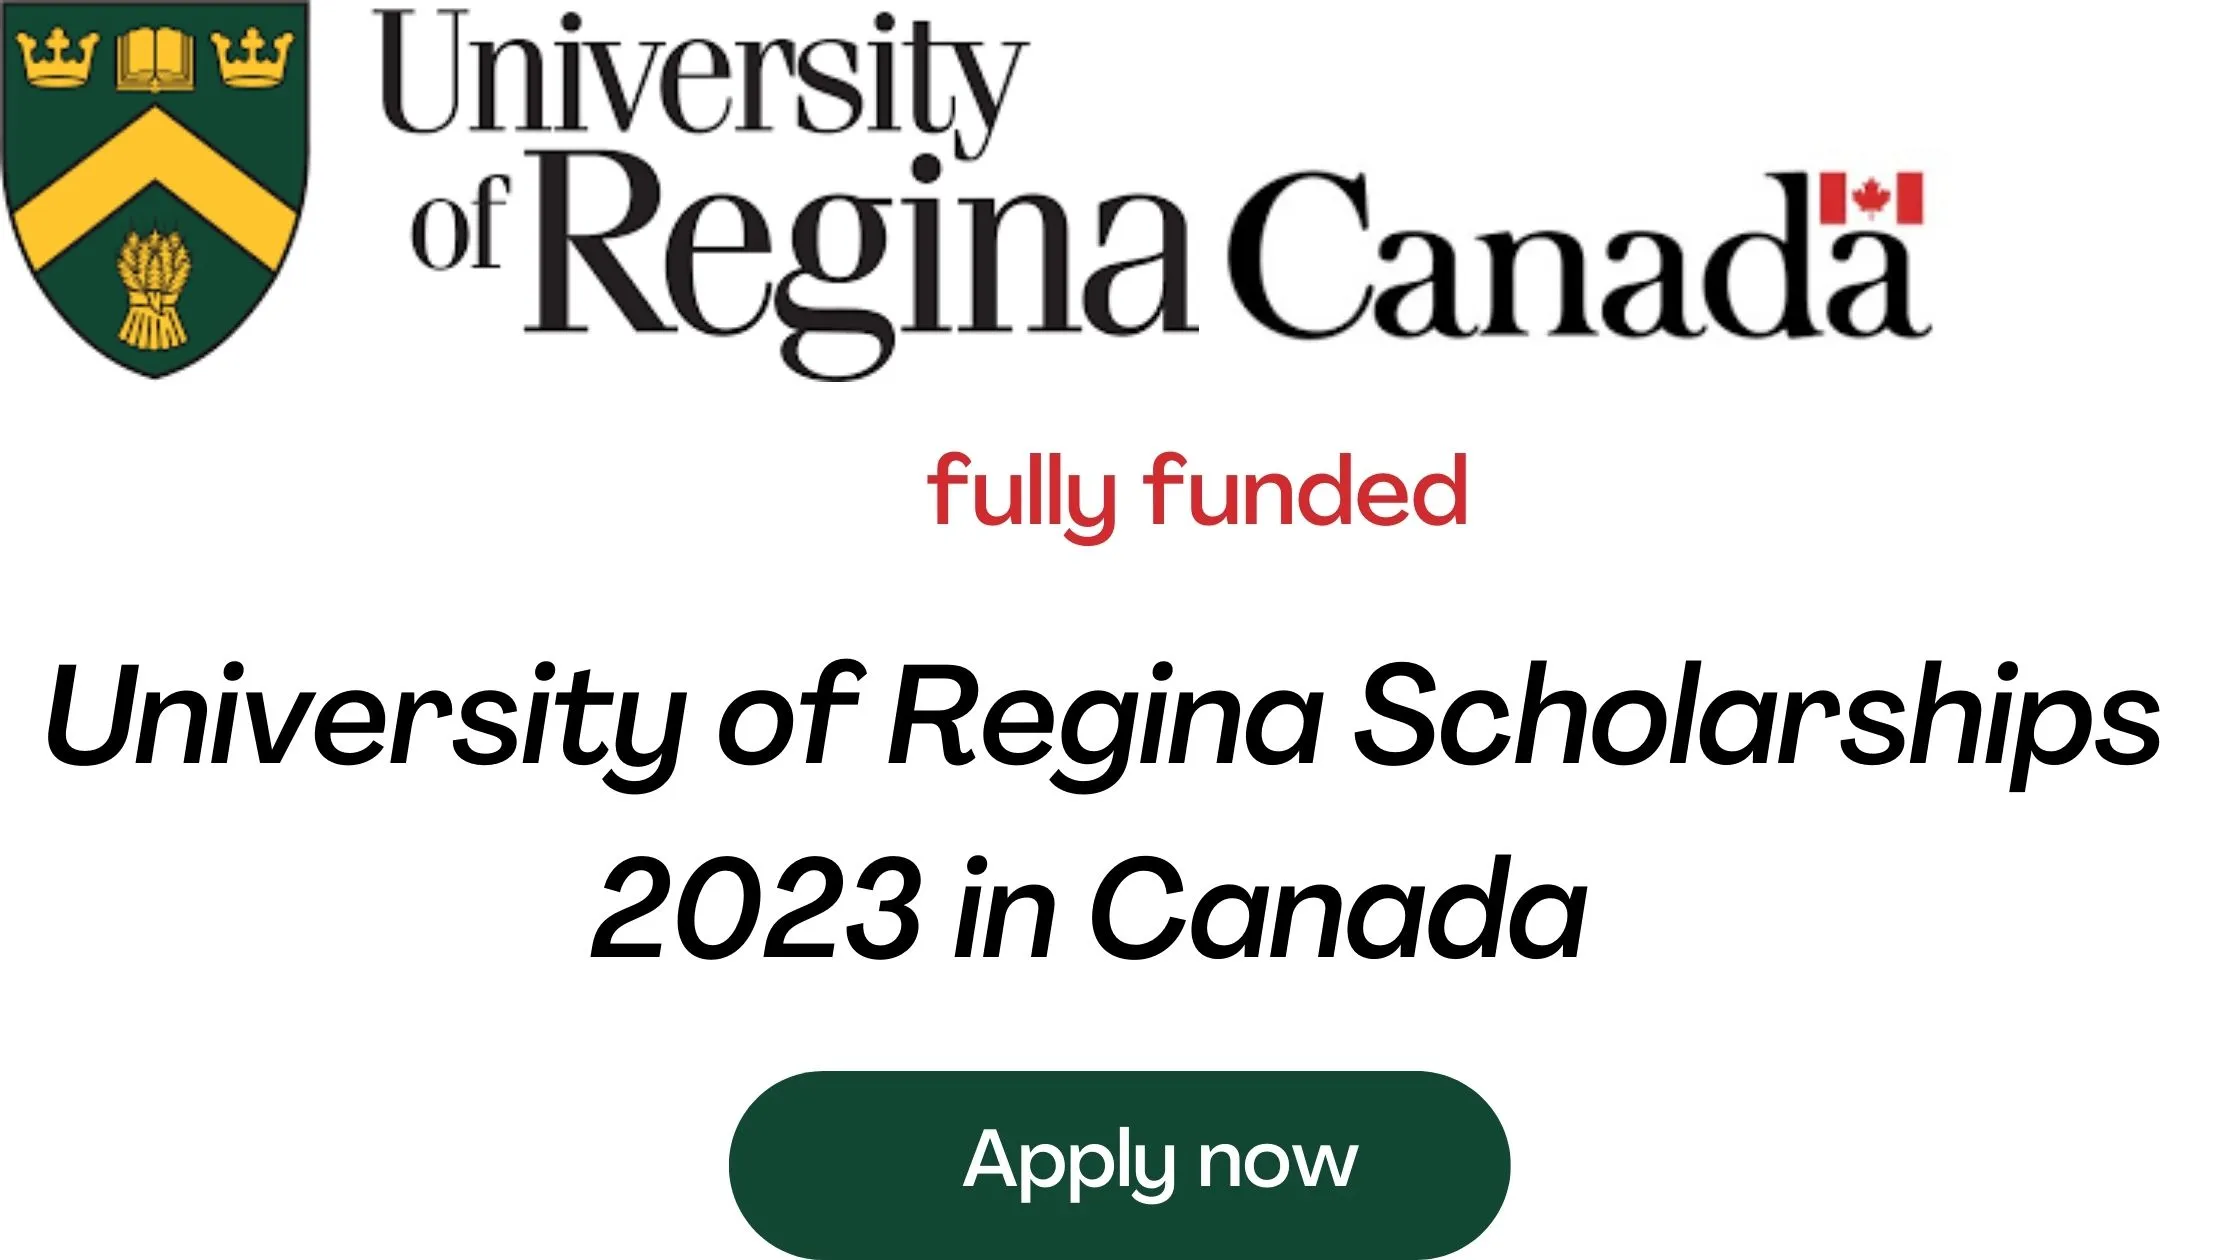 University of Regina Scholarships 2023 in Canada